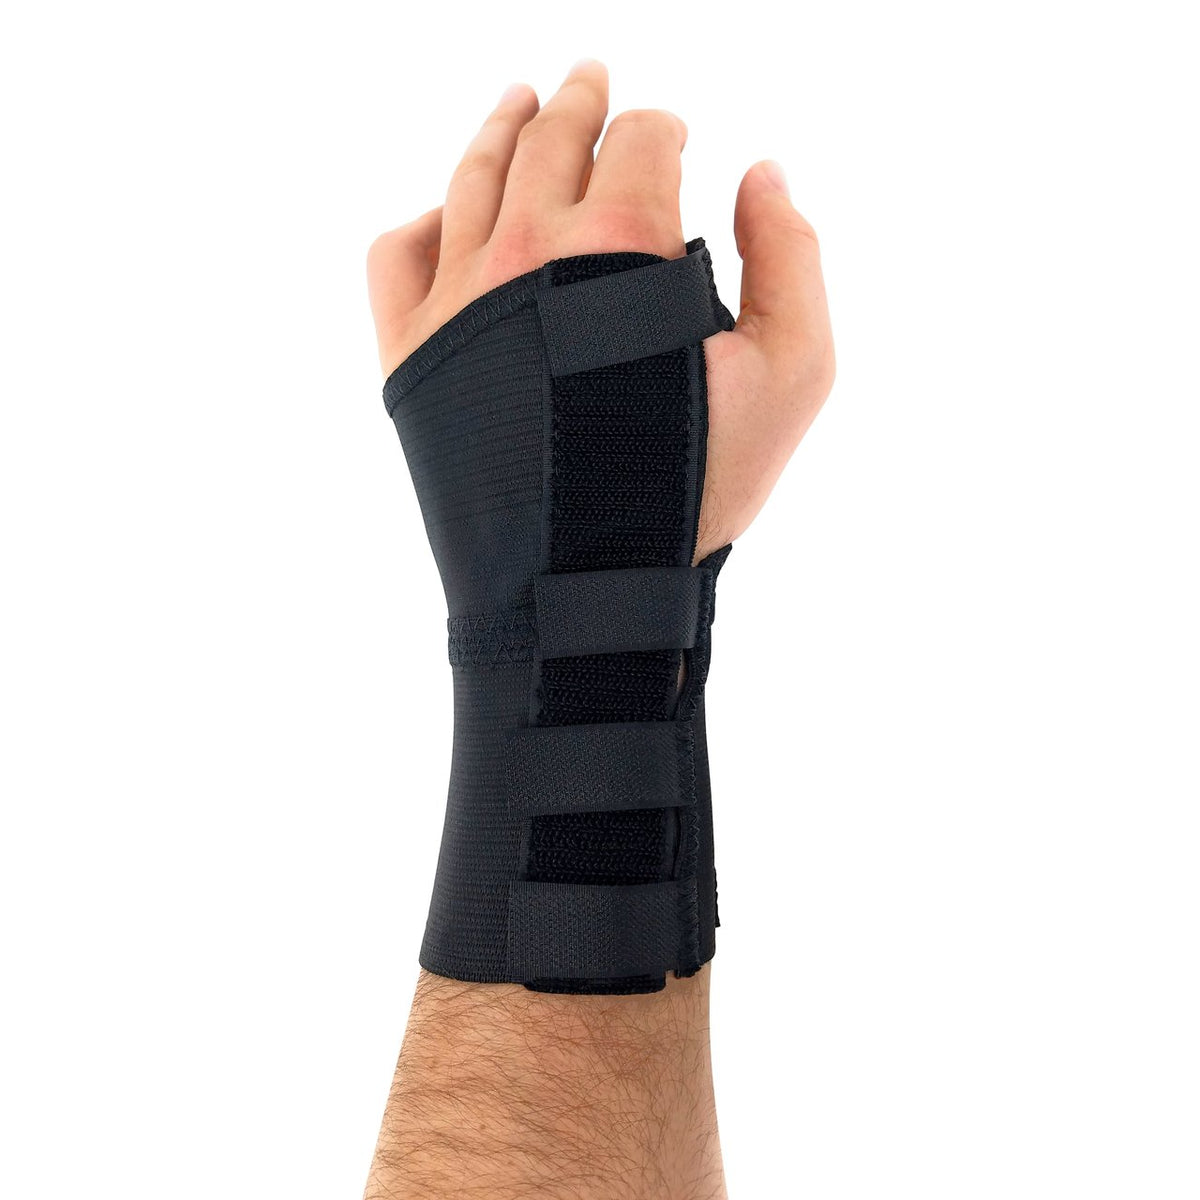 NEW Premium Custom Wrist Brace Support - With Removable Metal Splint / Stays